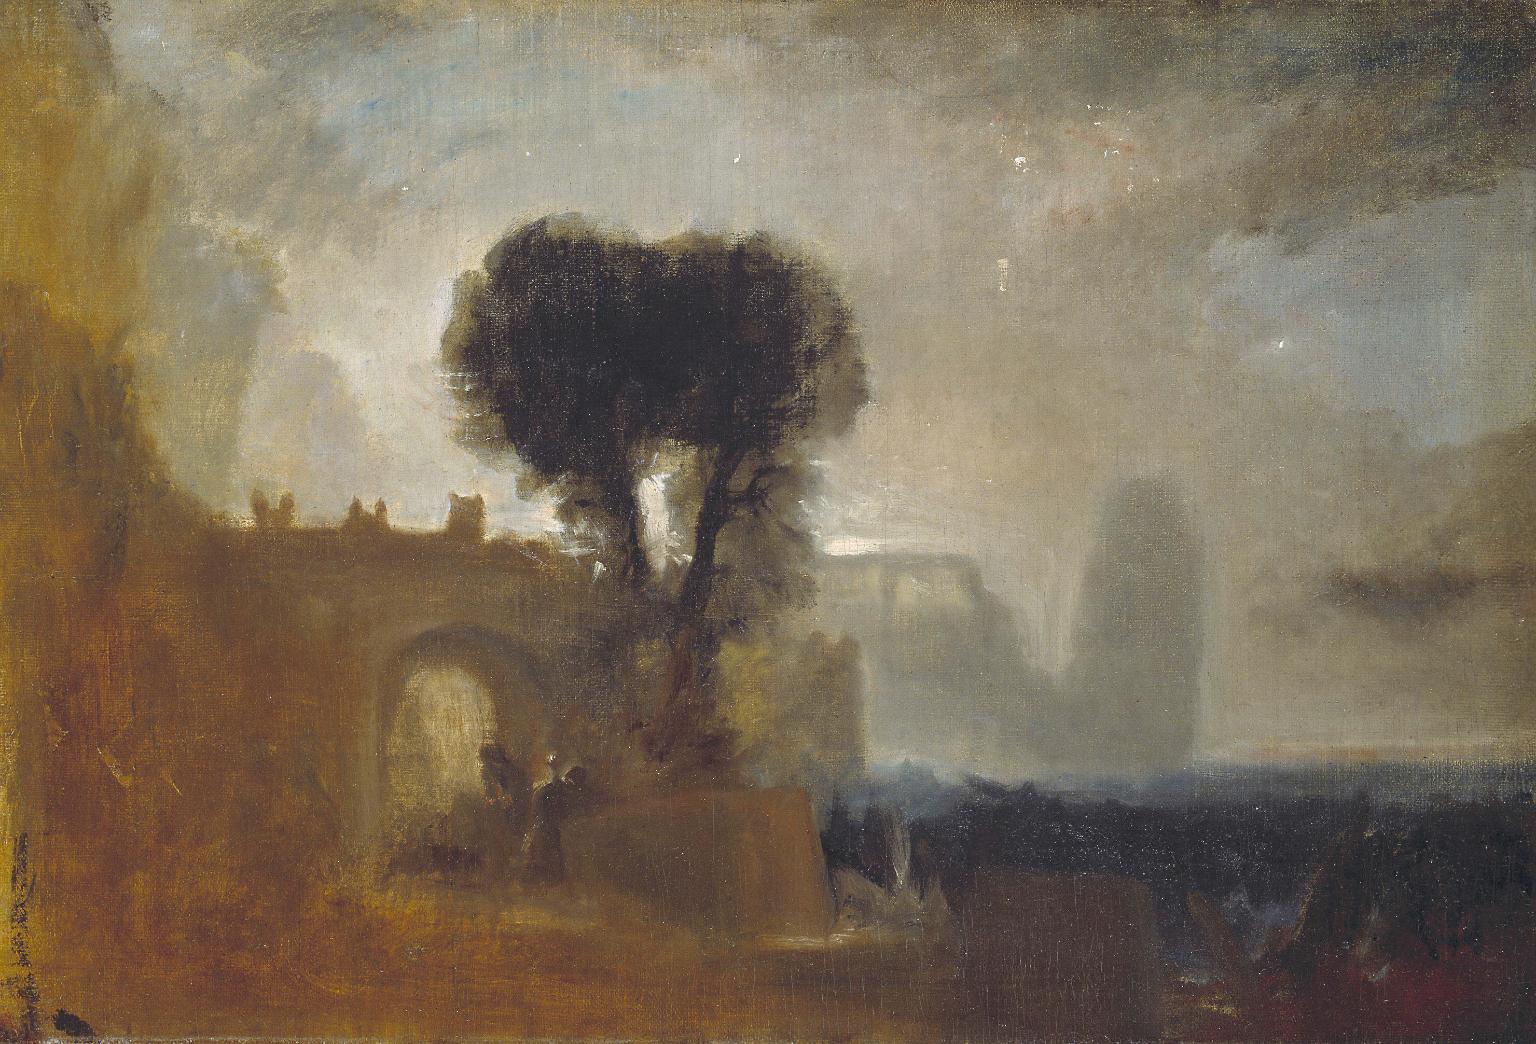 William+Turner-1775-1851 (3).jpg